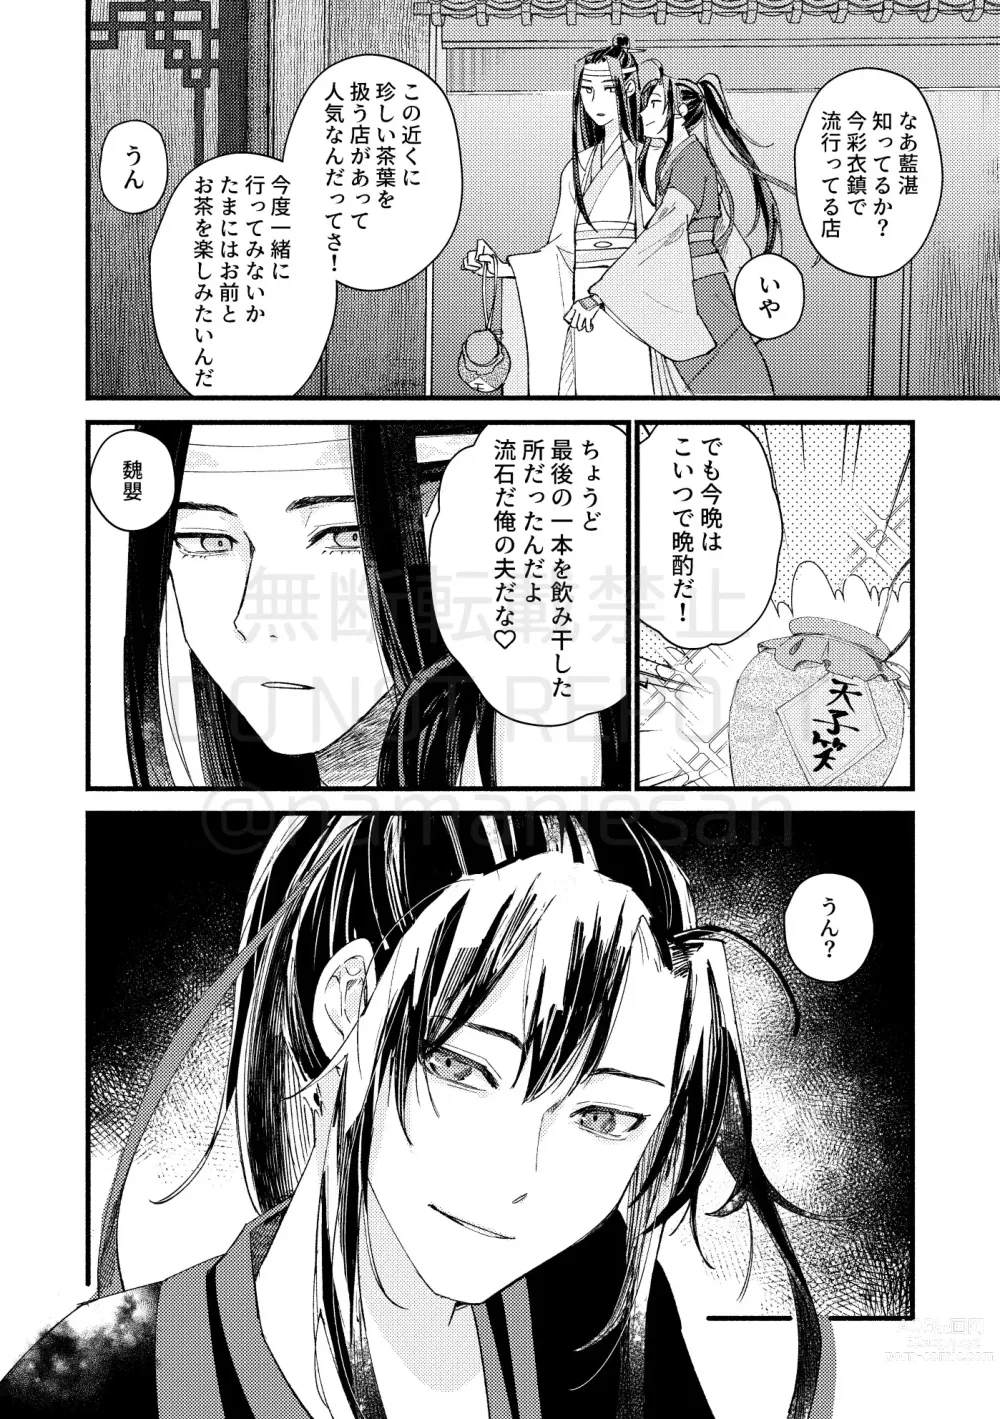 Page 14 of doujinshi Gyouan nite Koe o Kiku